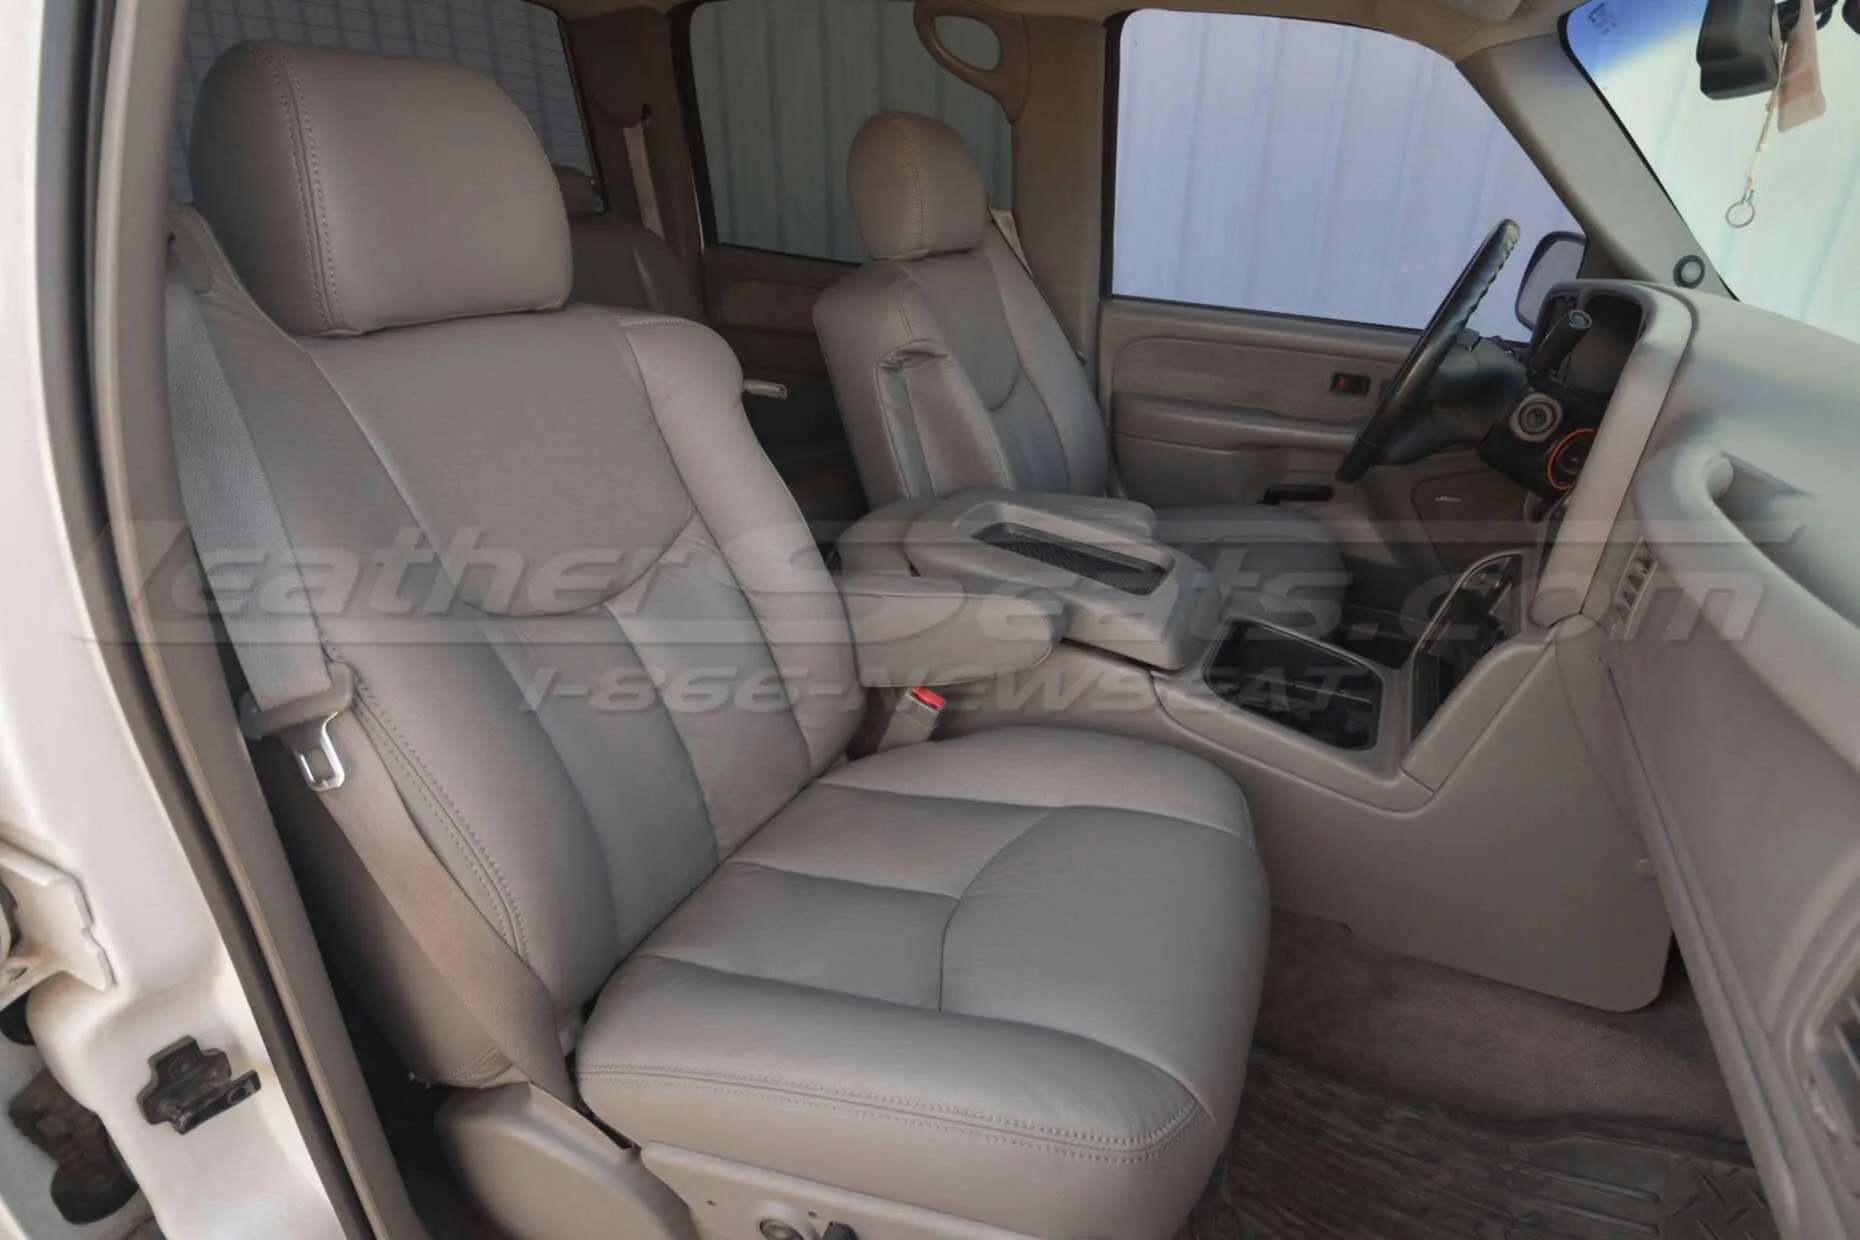 Chevrolet Silverado Upholstery Kit - Smoke - Installed kit front passenger seat